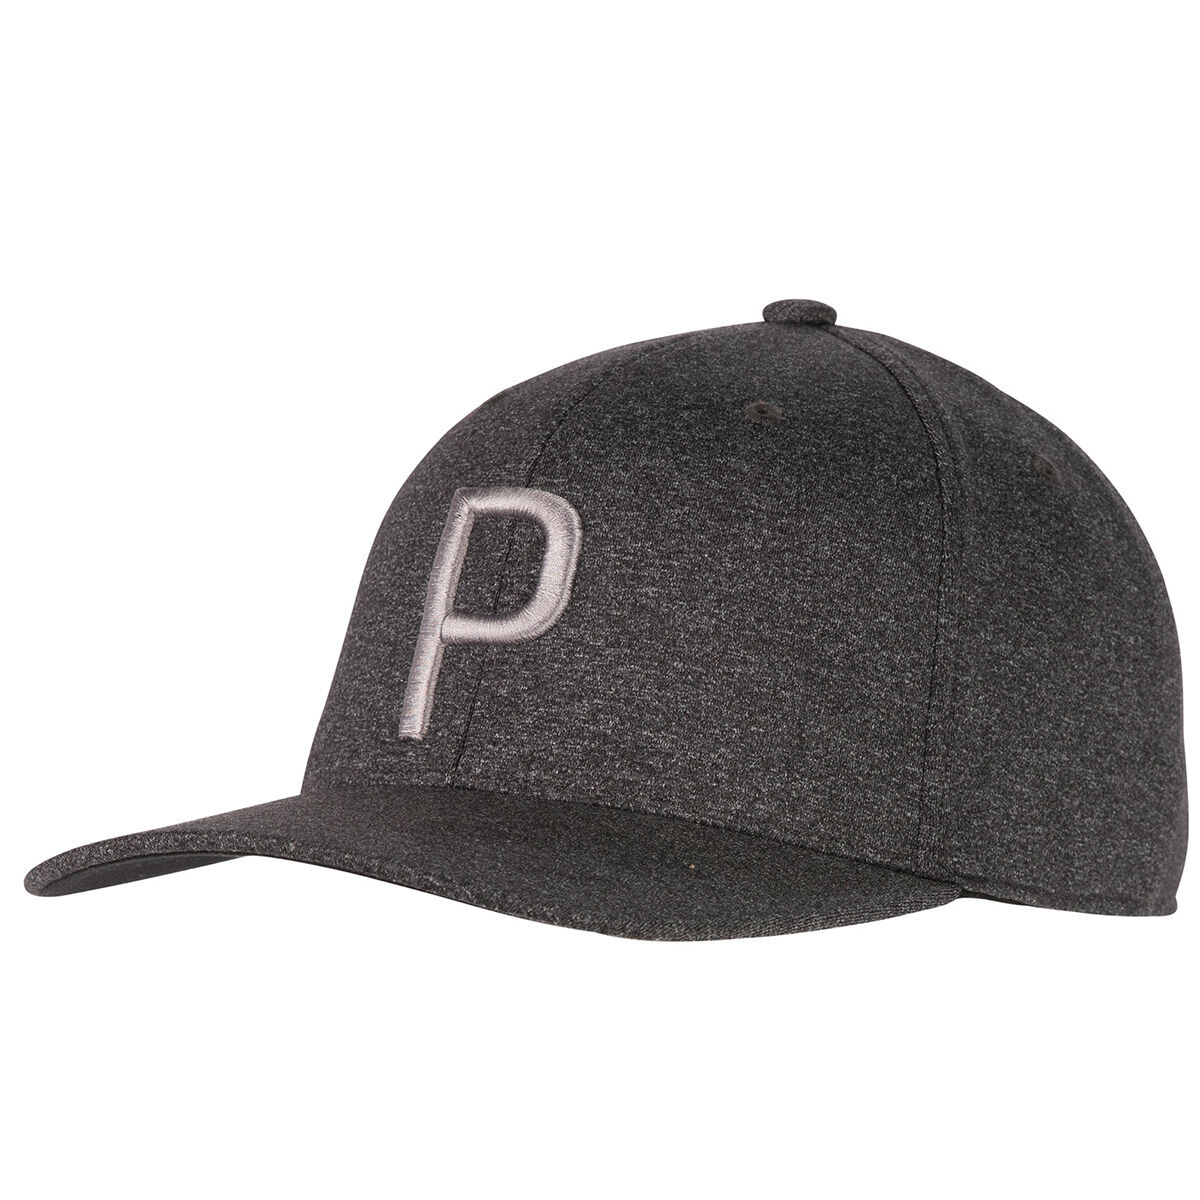 p puma hat